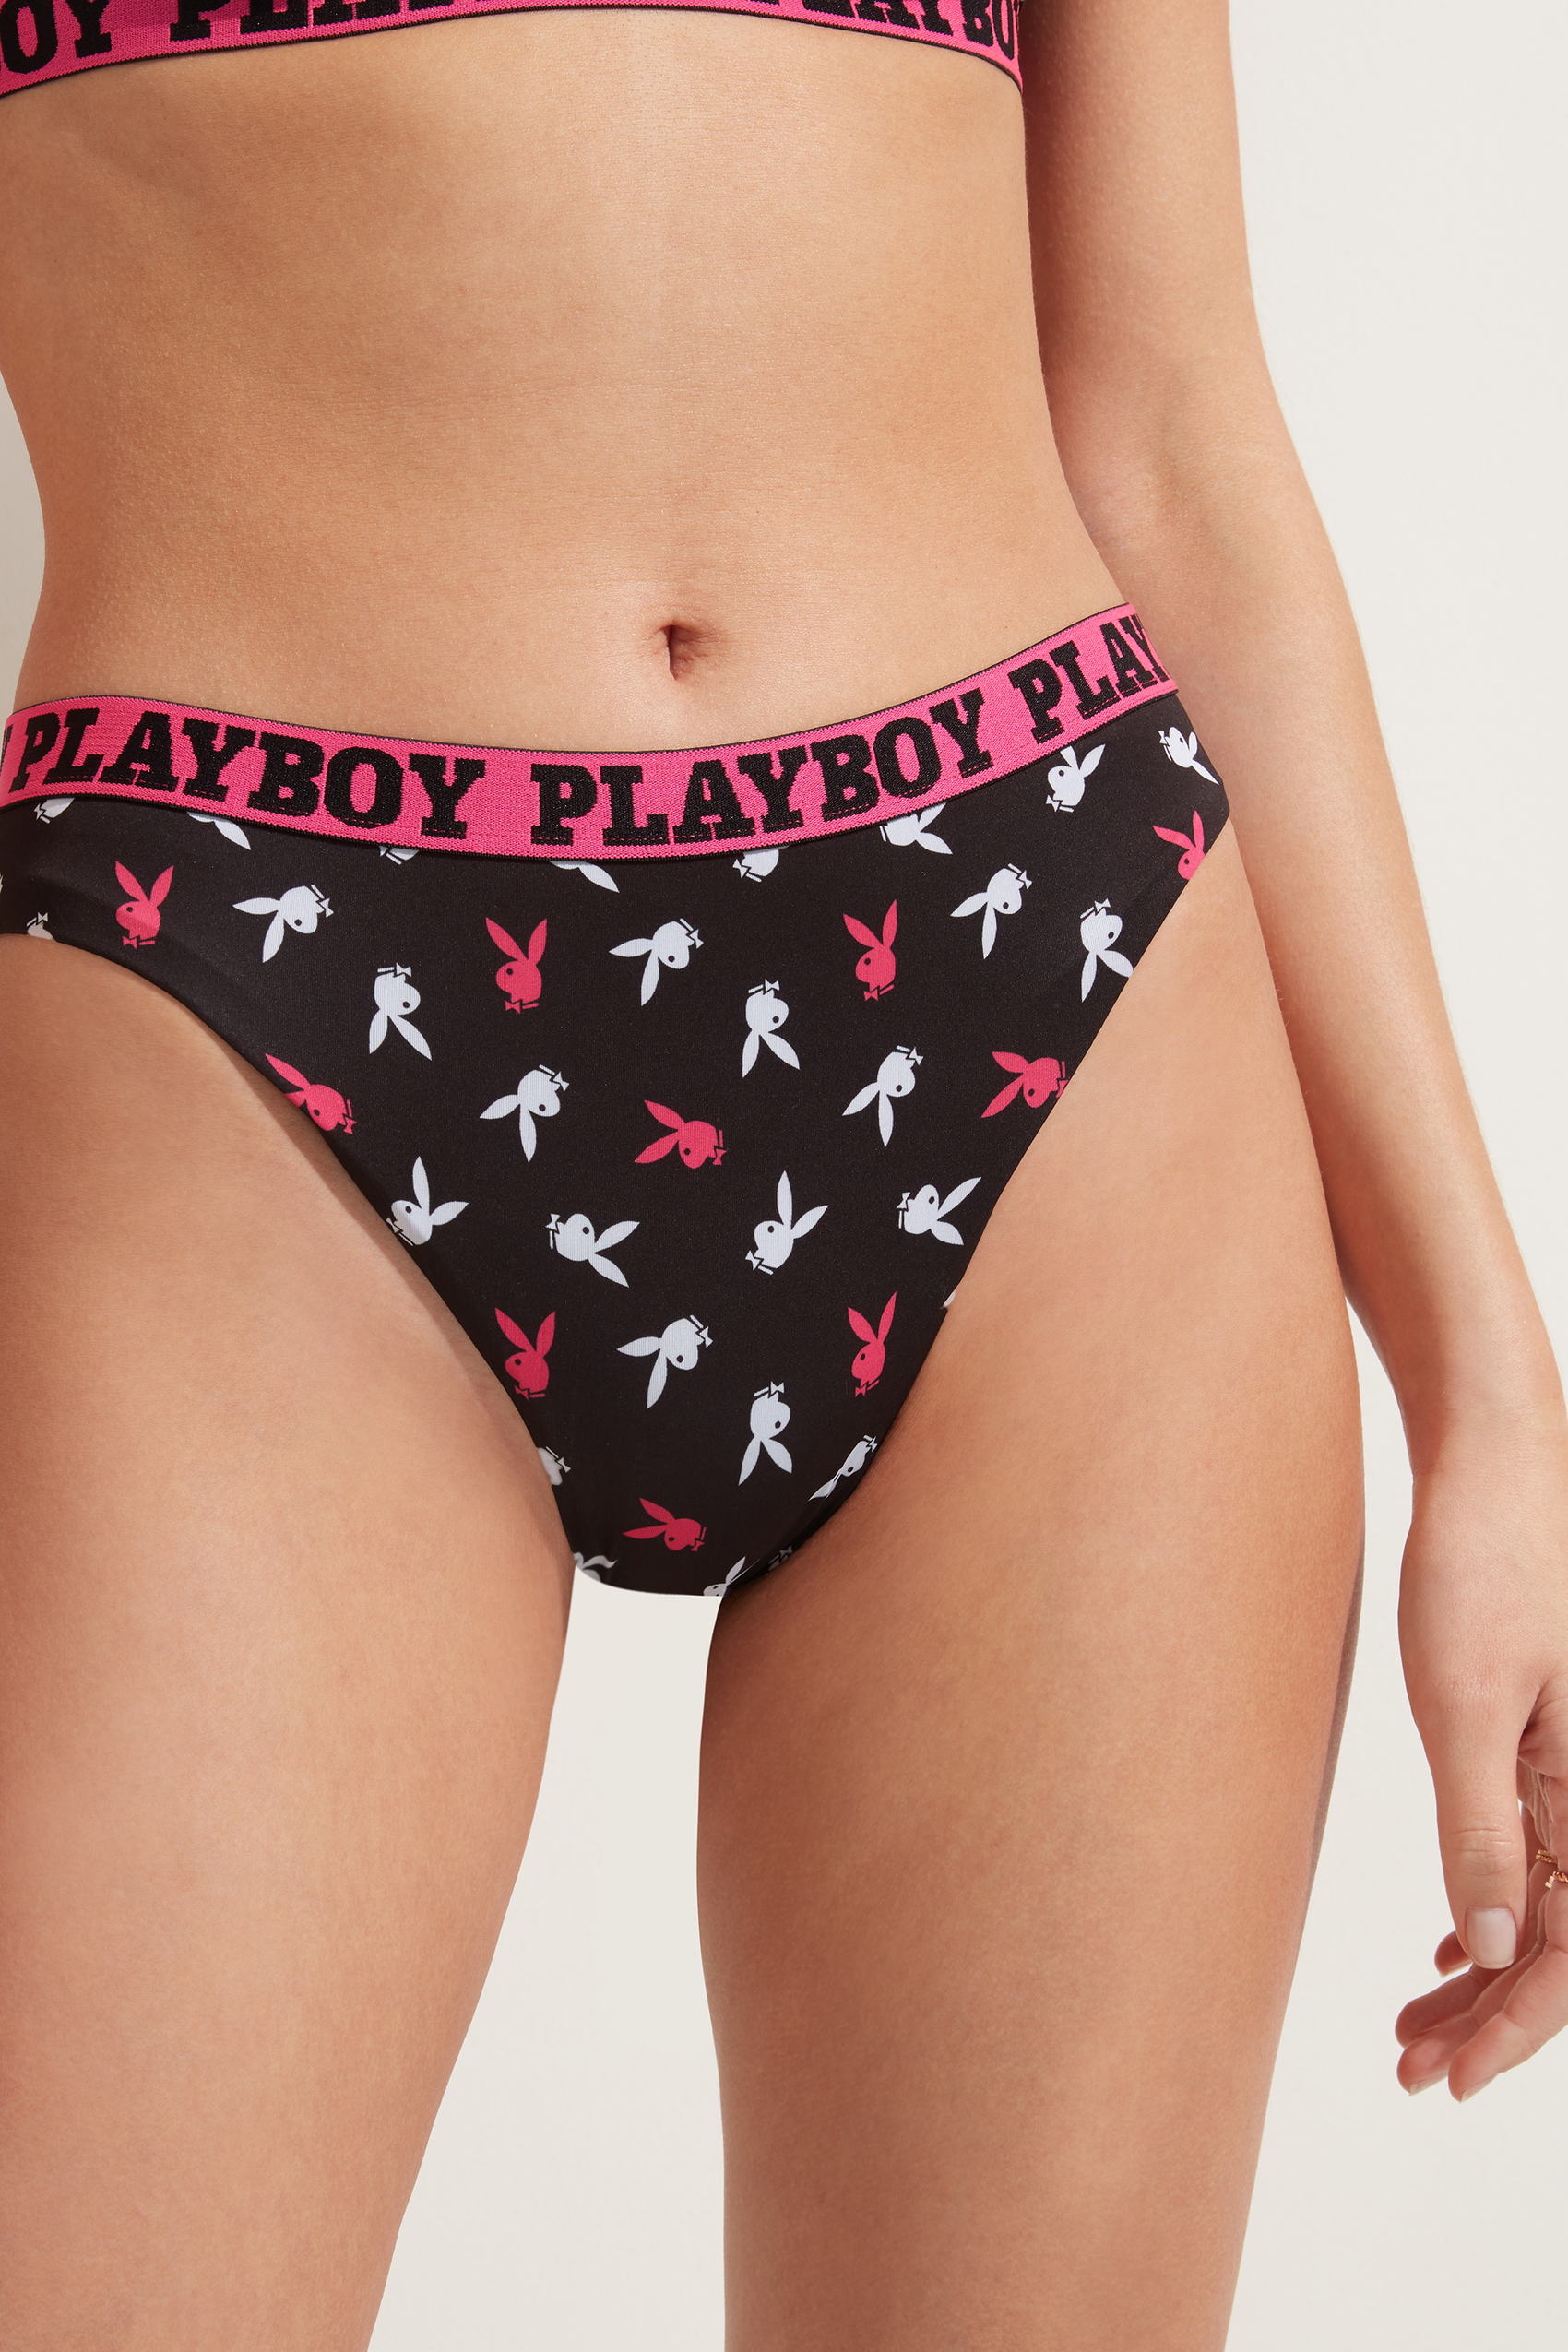 Playboy Bikini Panties for Women